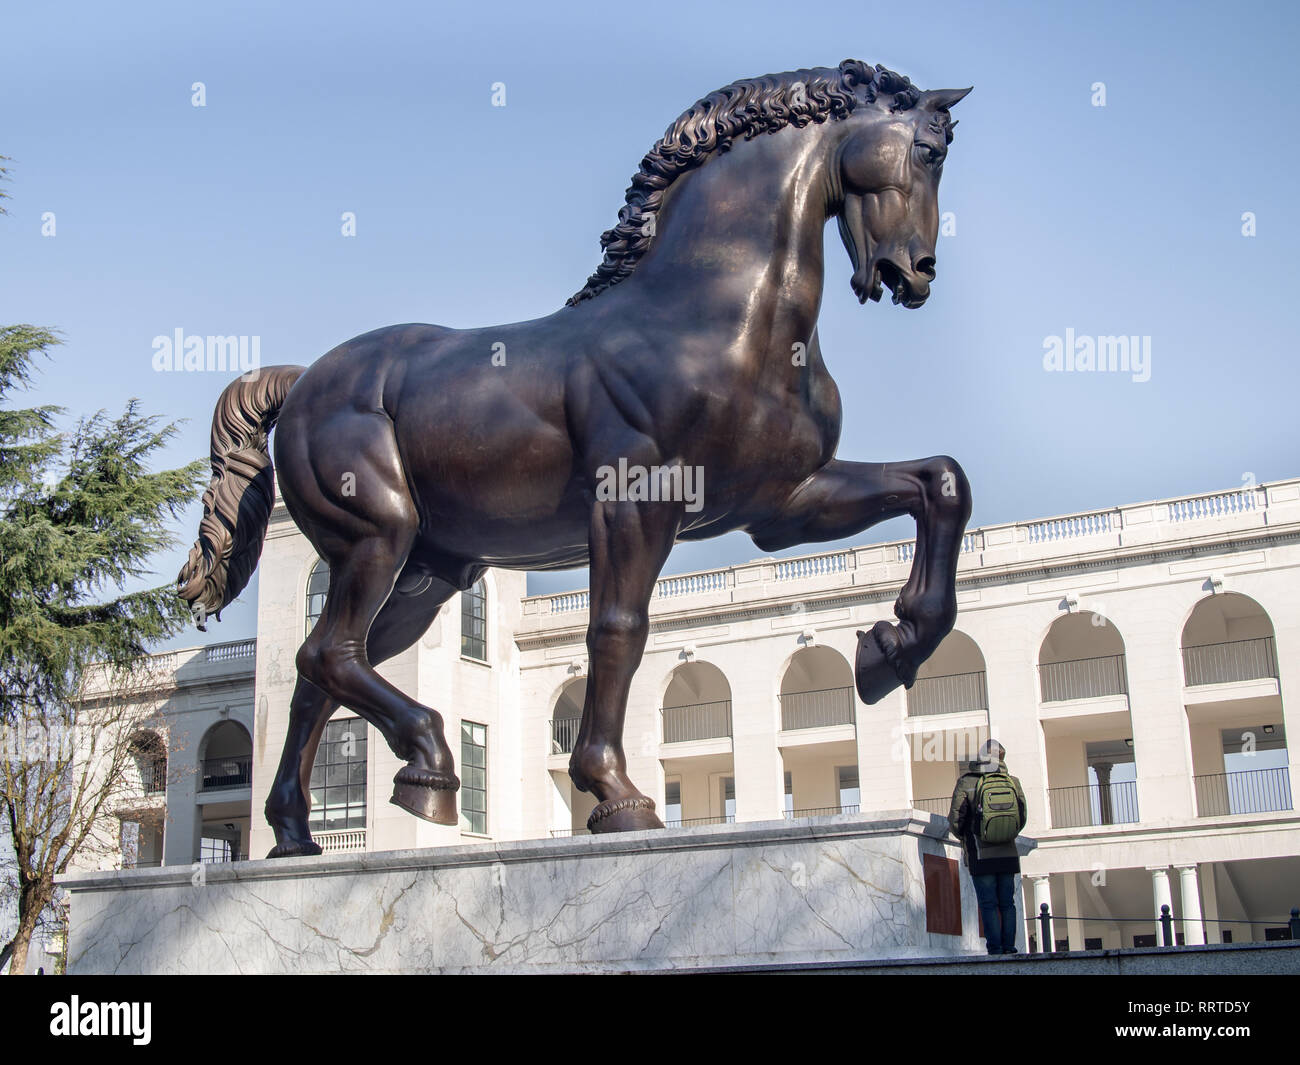 Nina akamu horse hi-res stock photography and images - Alamy